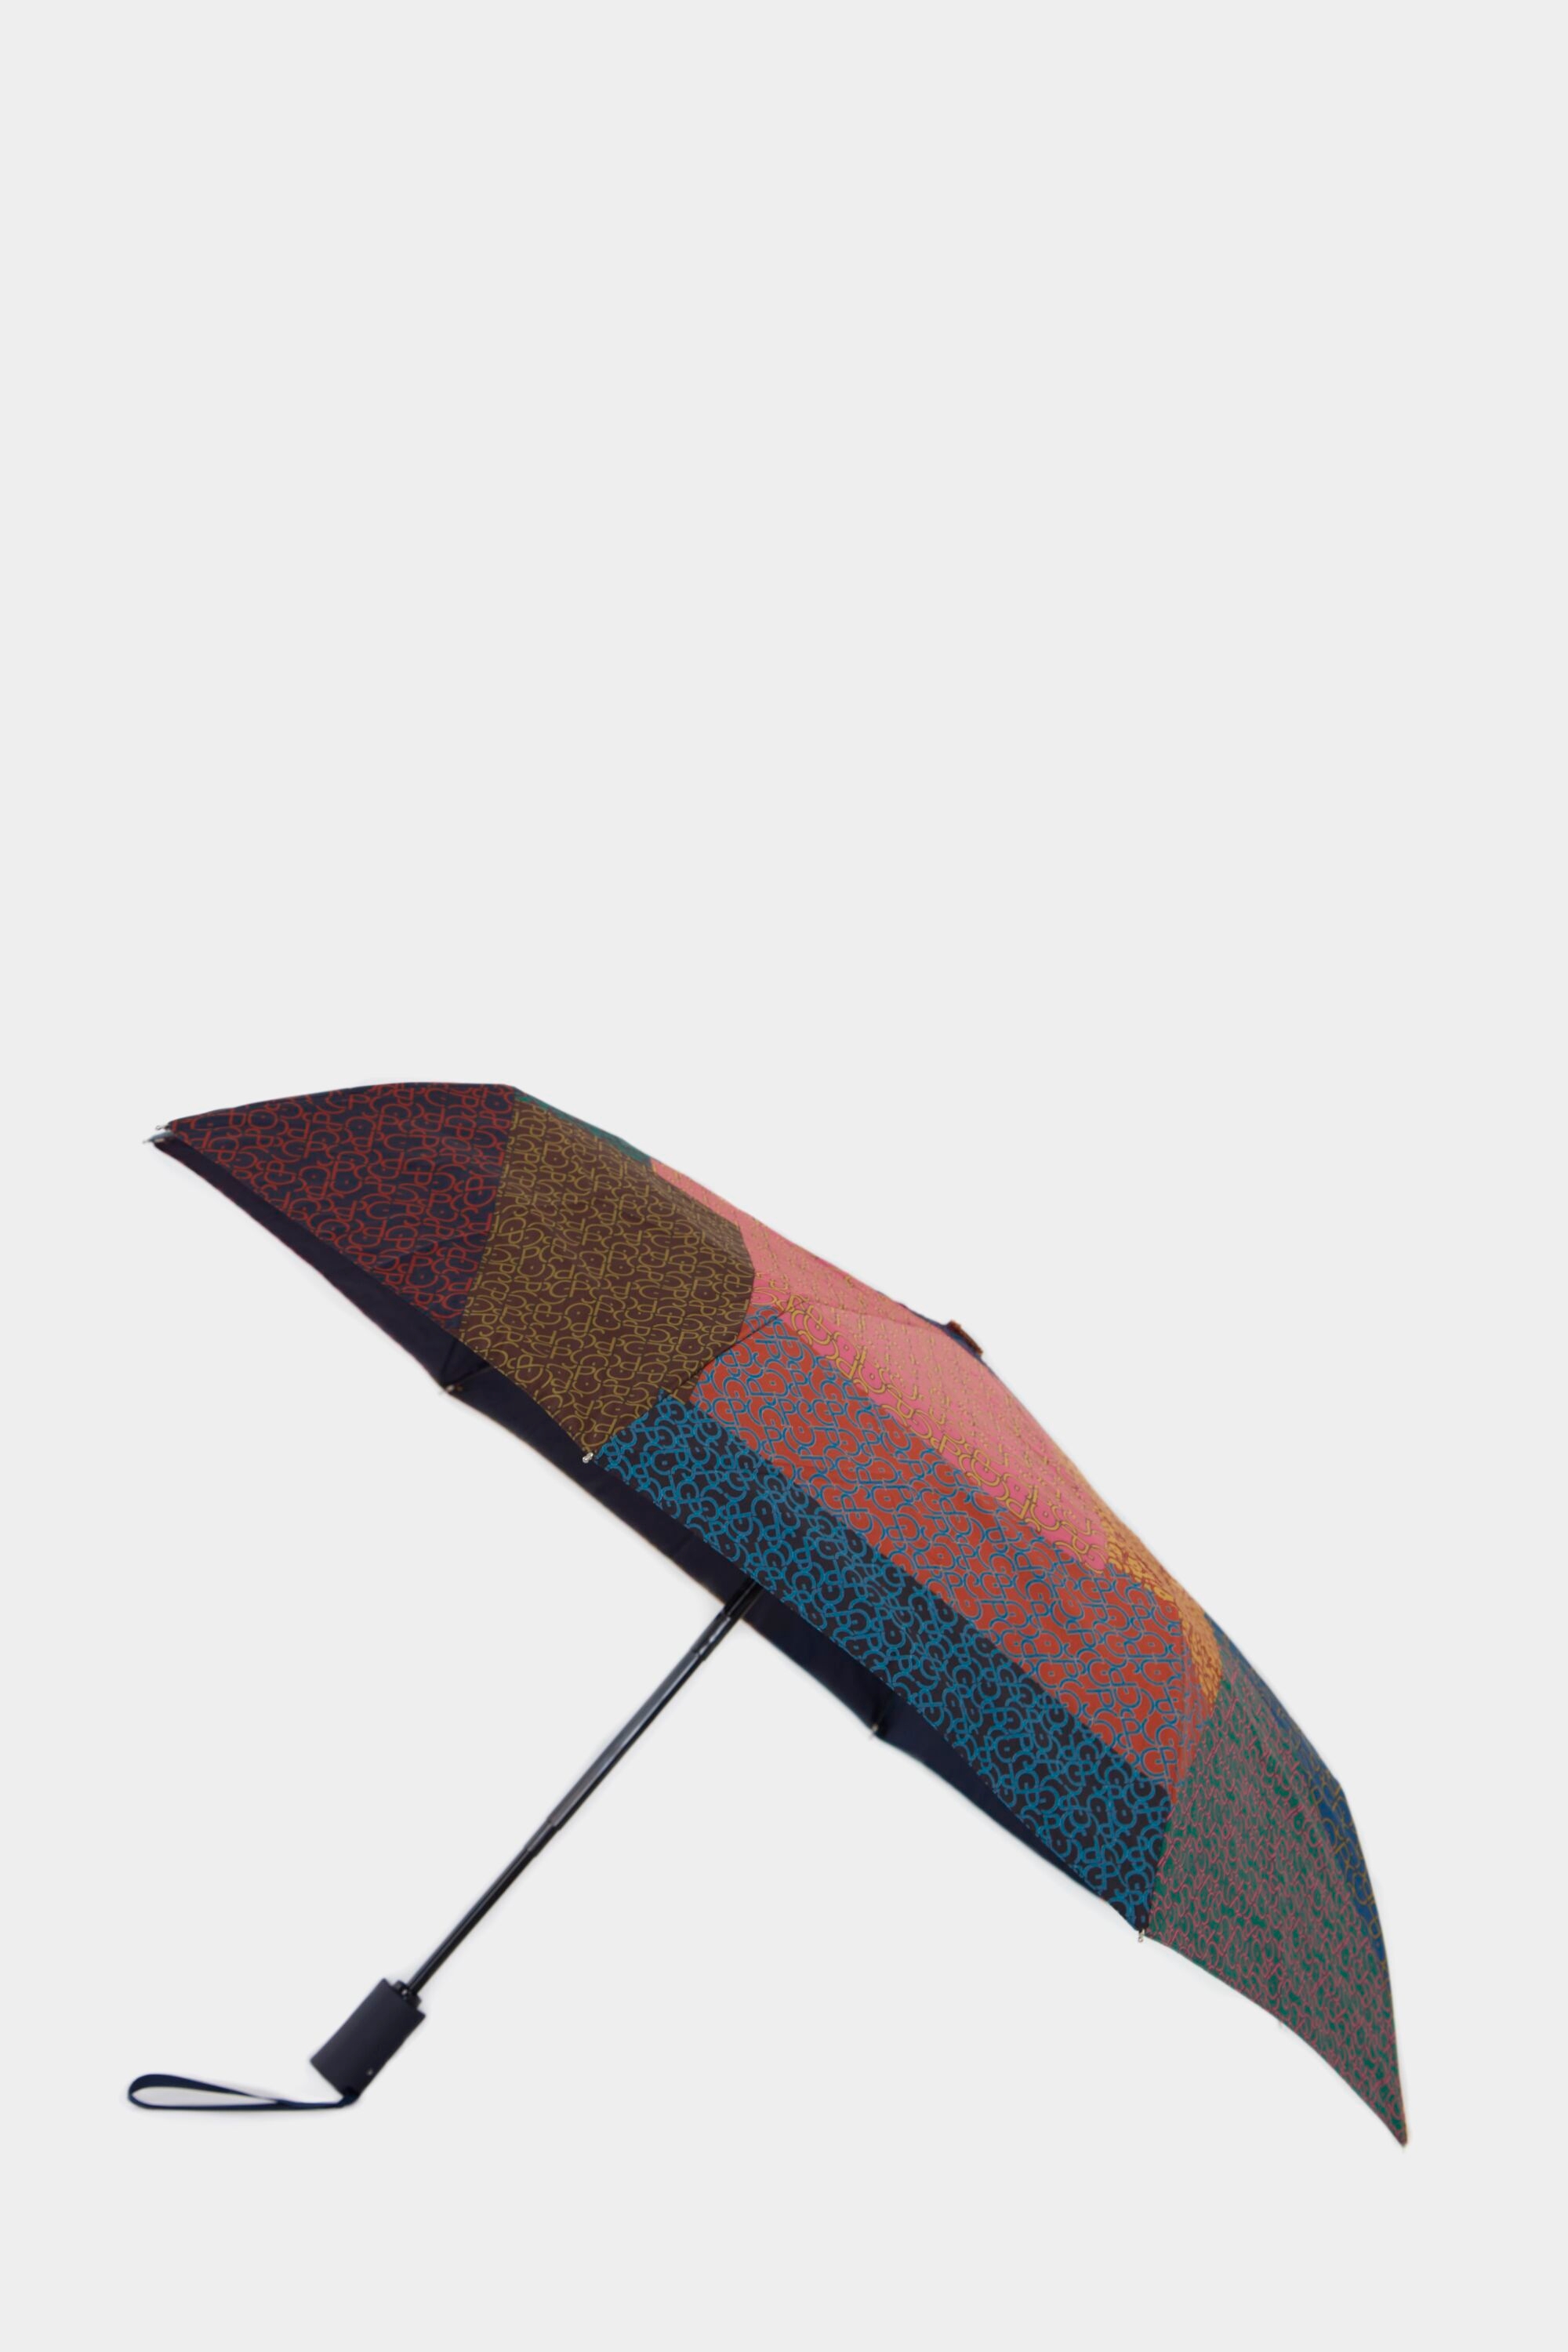 Gutenberg folding umbrella